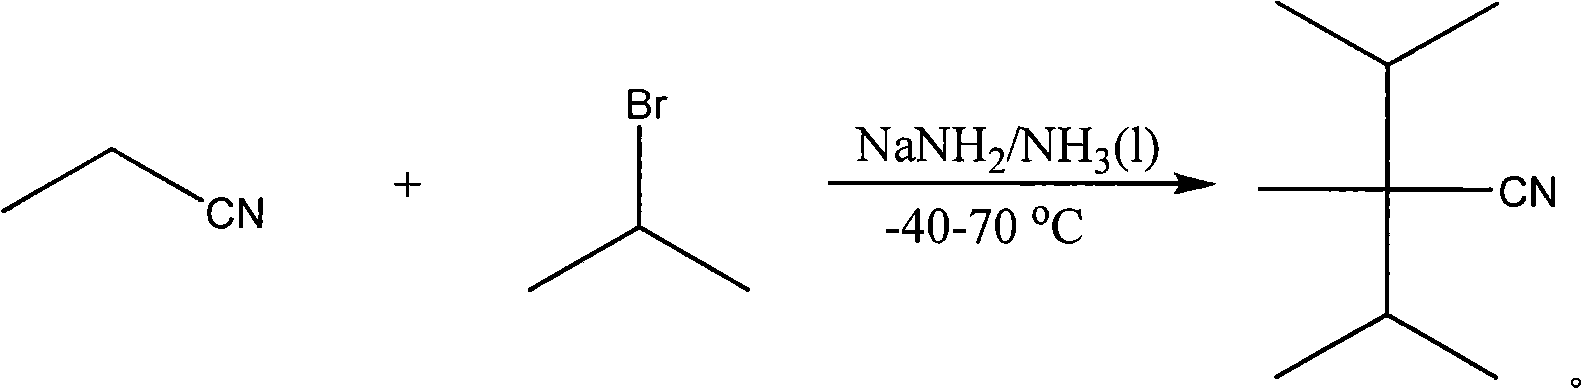 Preparation method of 2,3-dimethyl-2-isopropyl butyronitrile